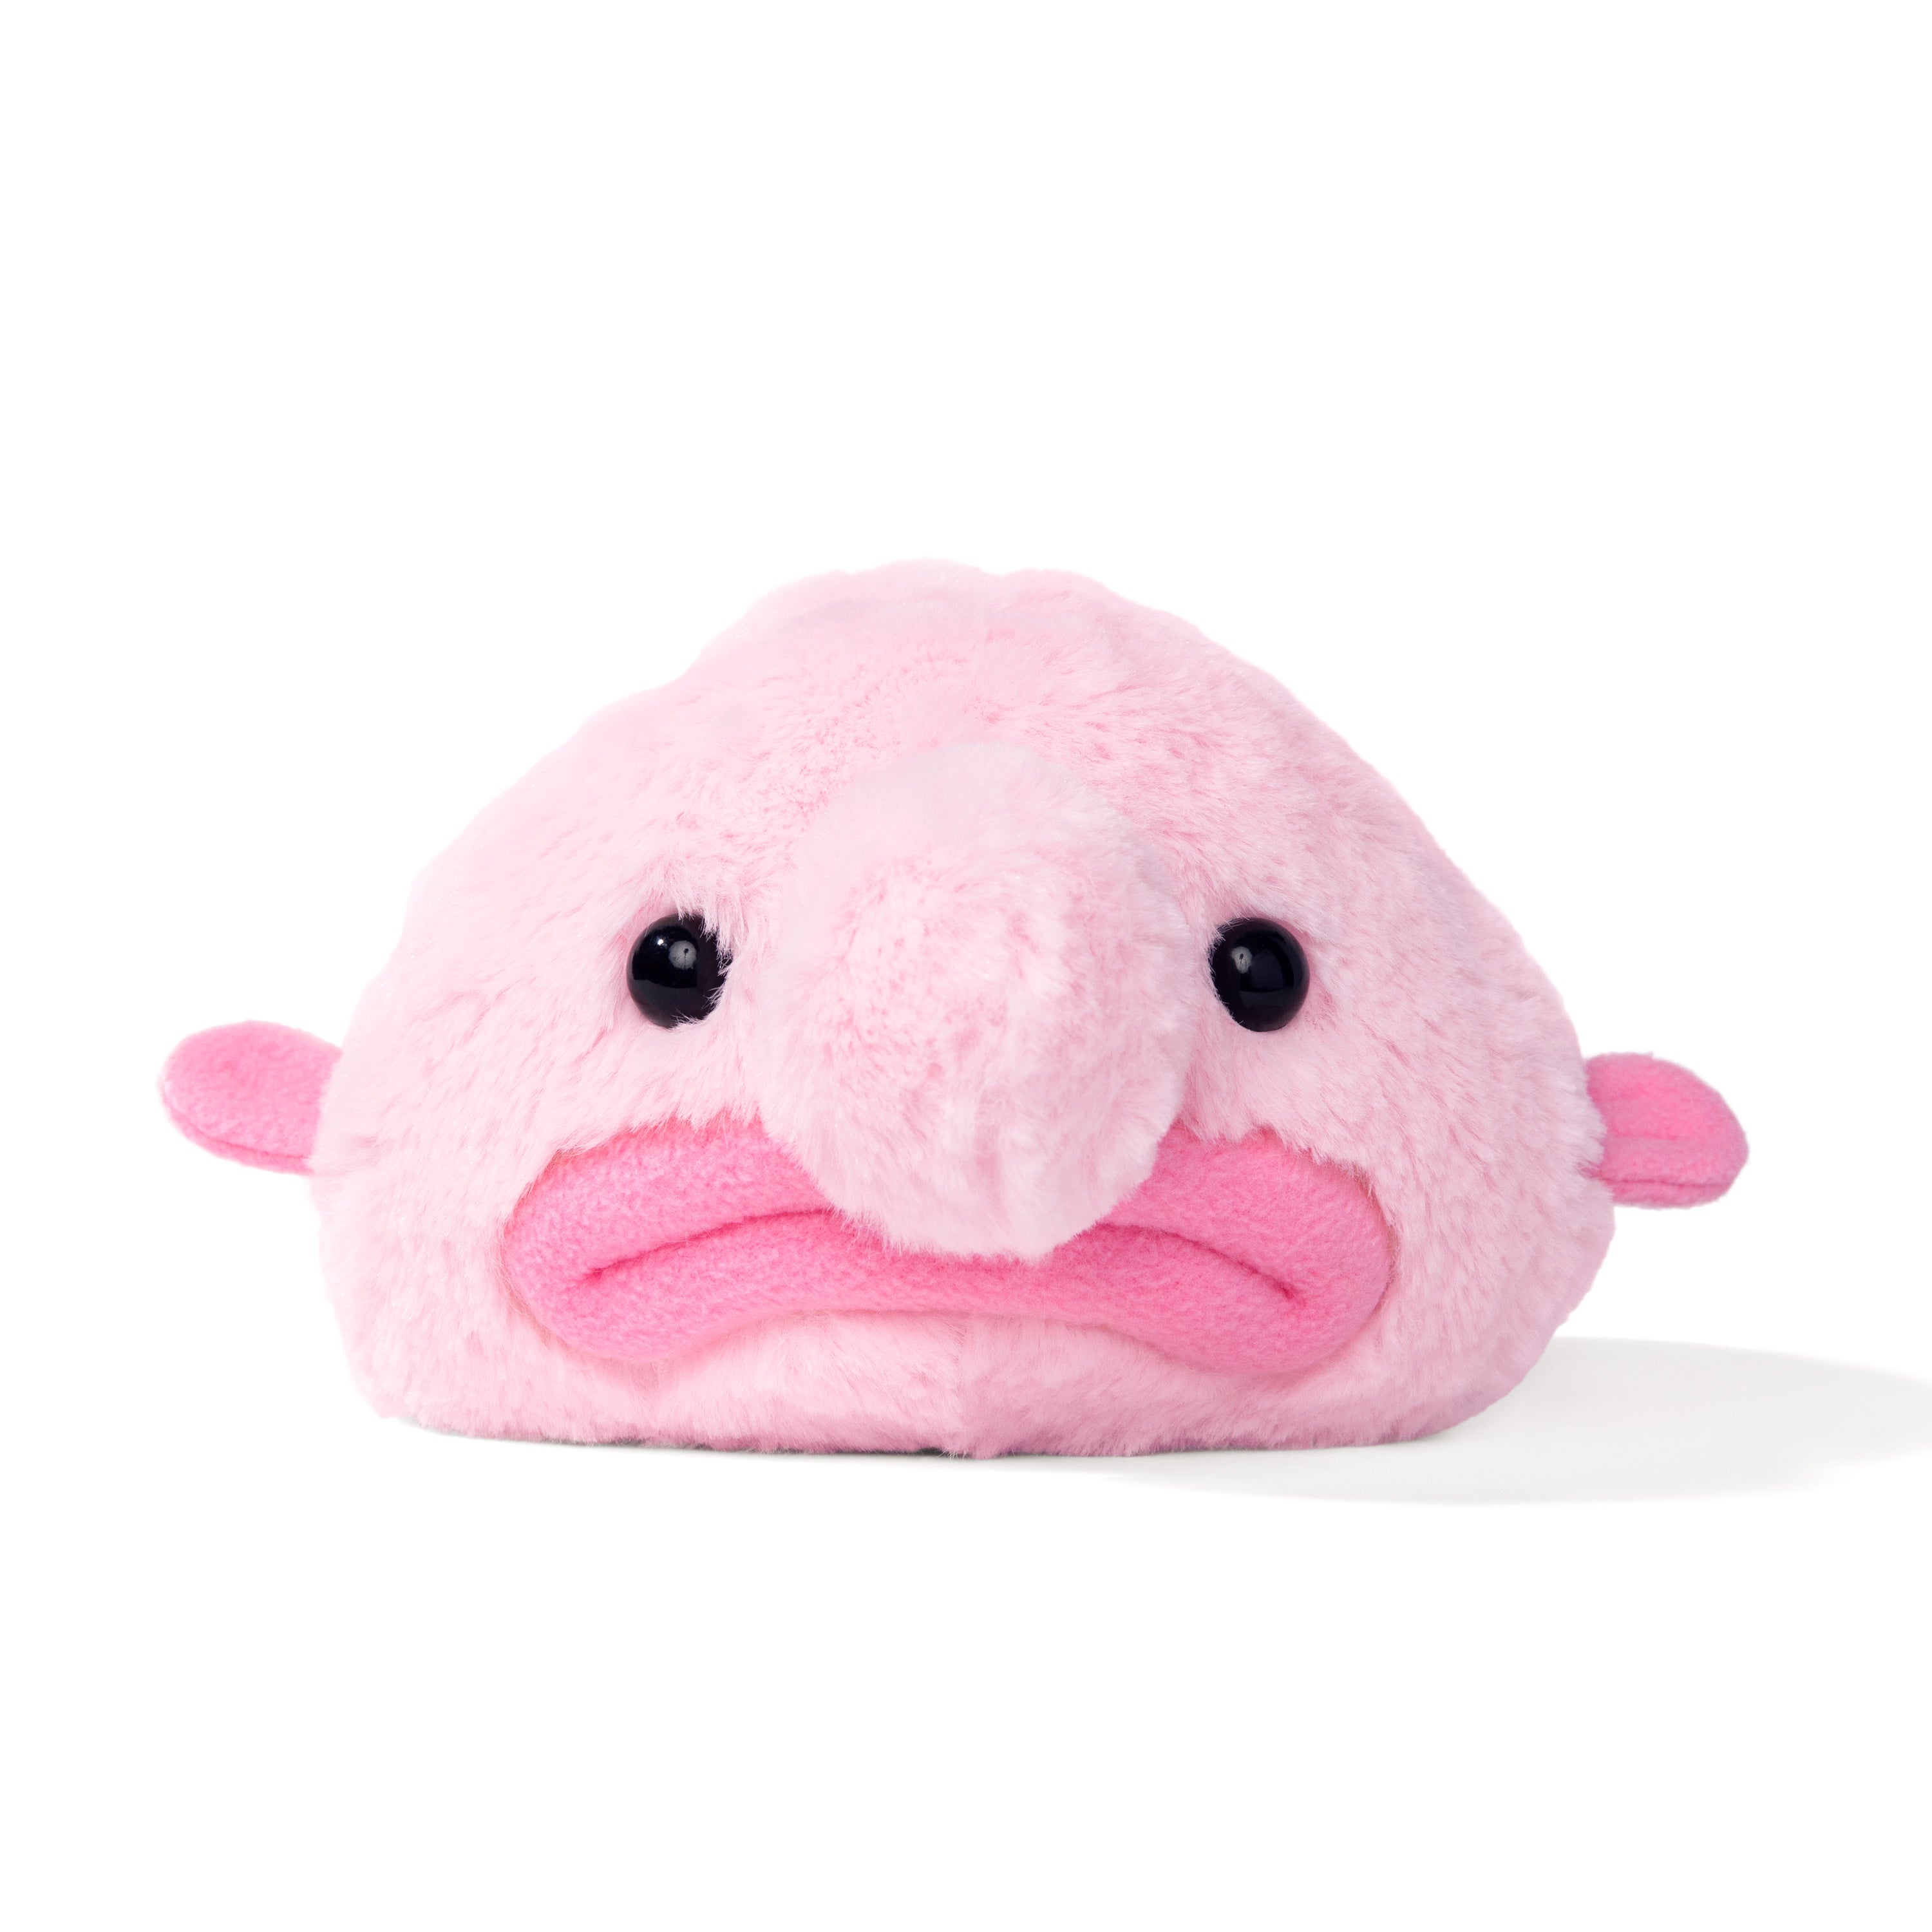 A funny Blob Fish : r/AnimalsBeingFunny